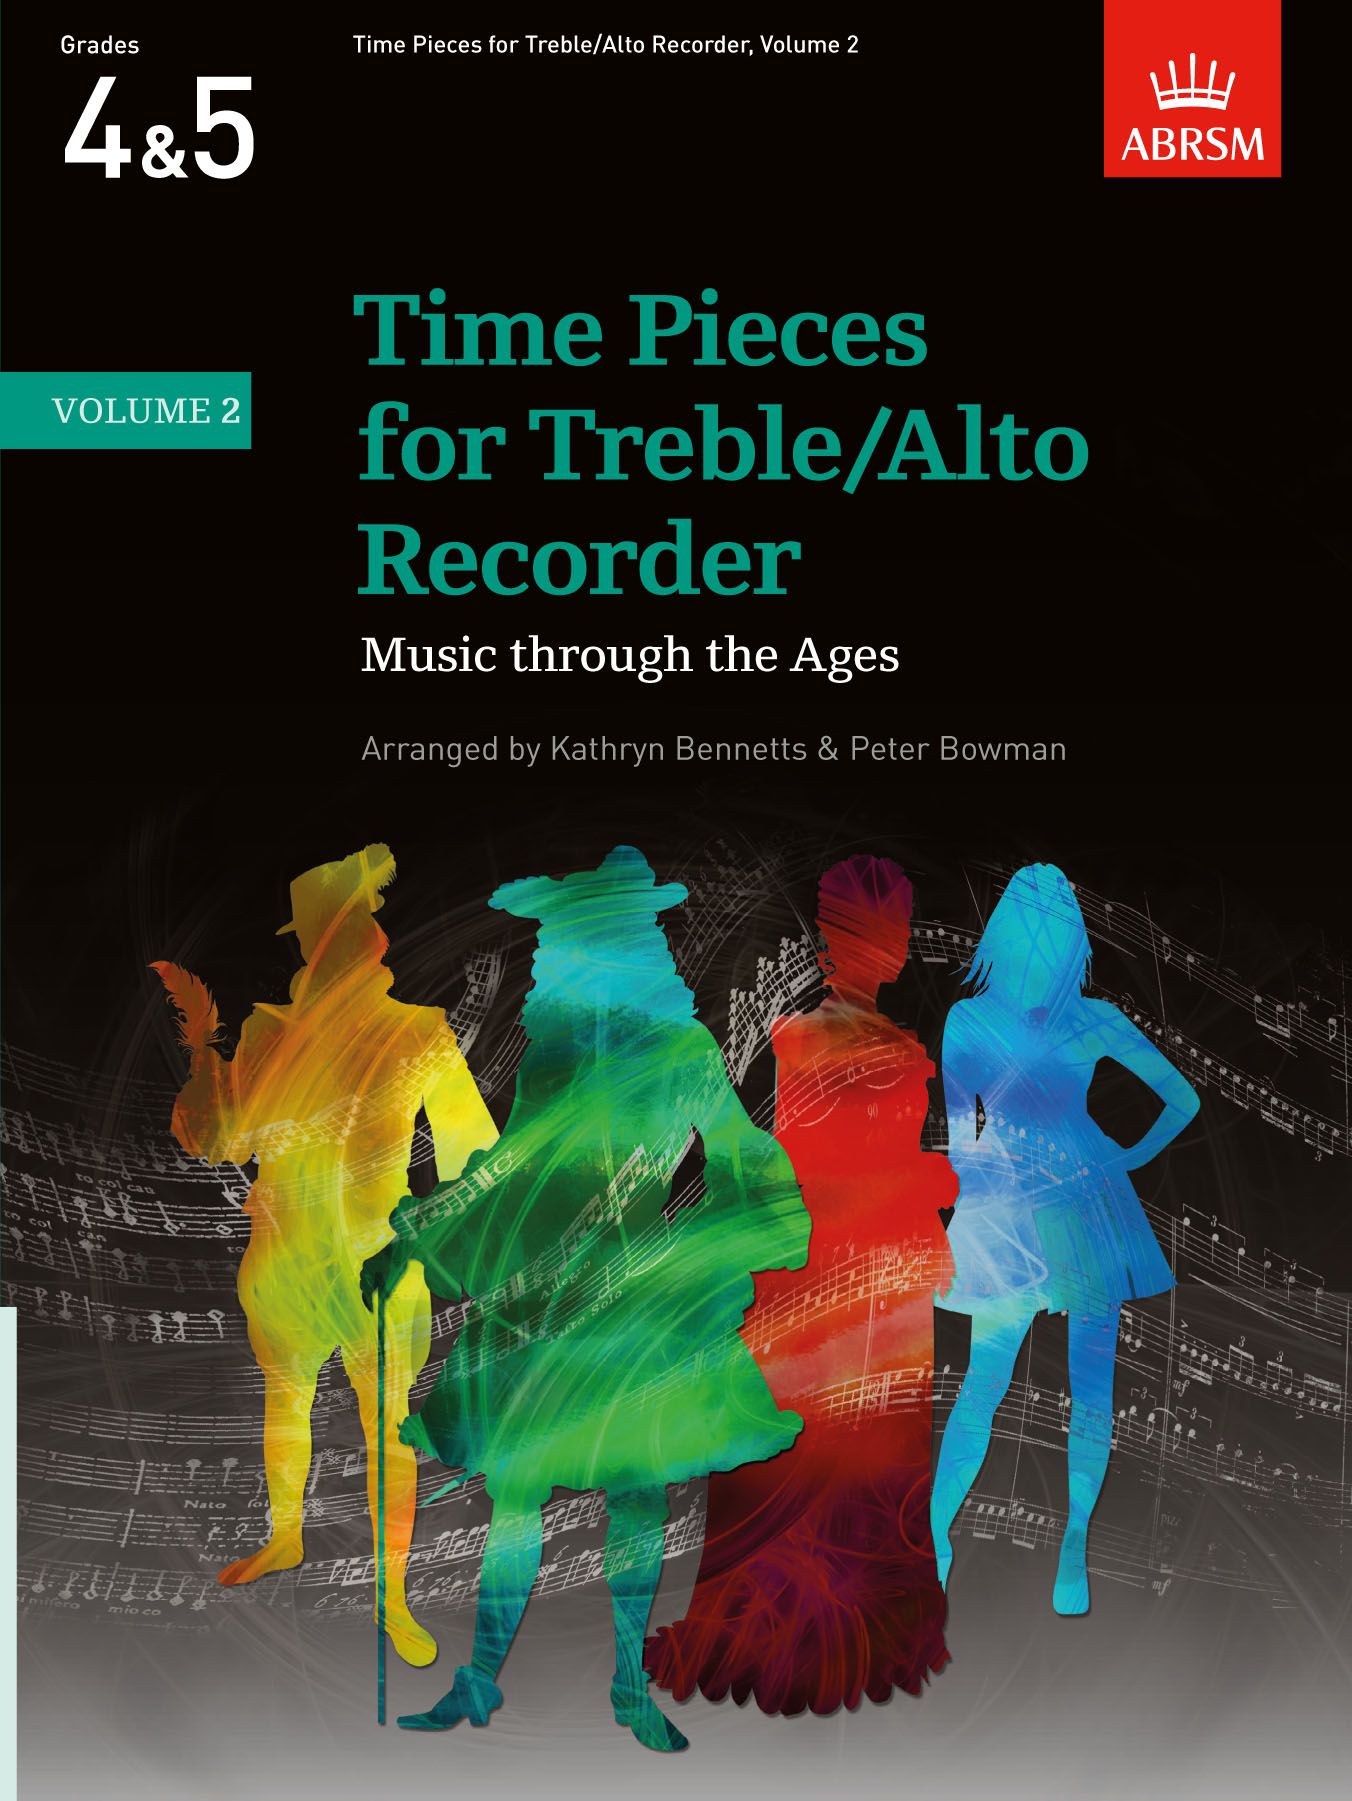 Time Pieces for Treble/Alto Recorder Volume 2 for Grades 4-5